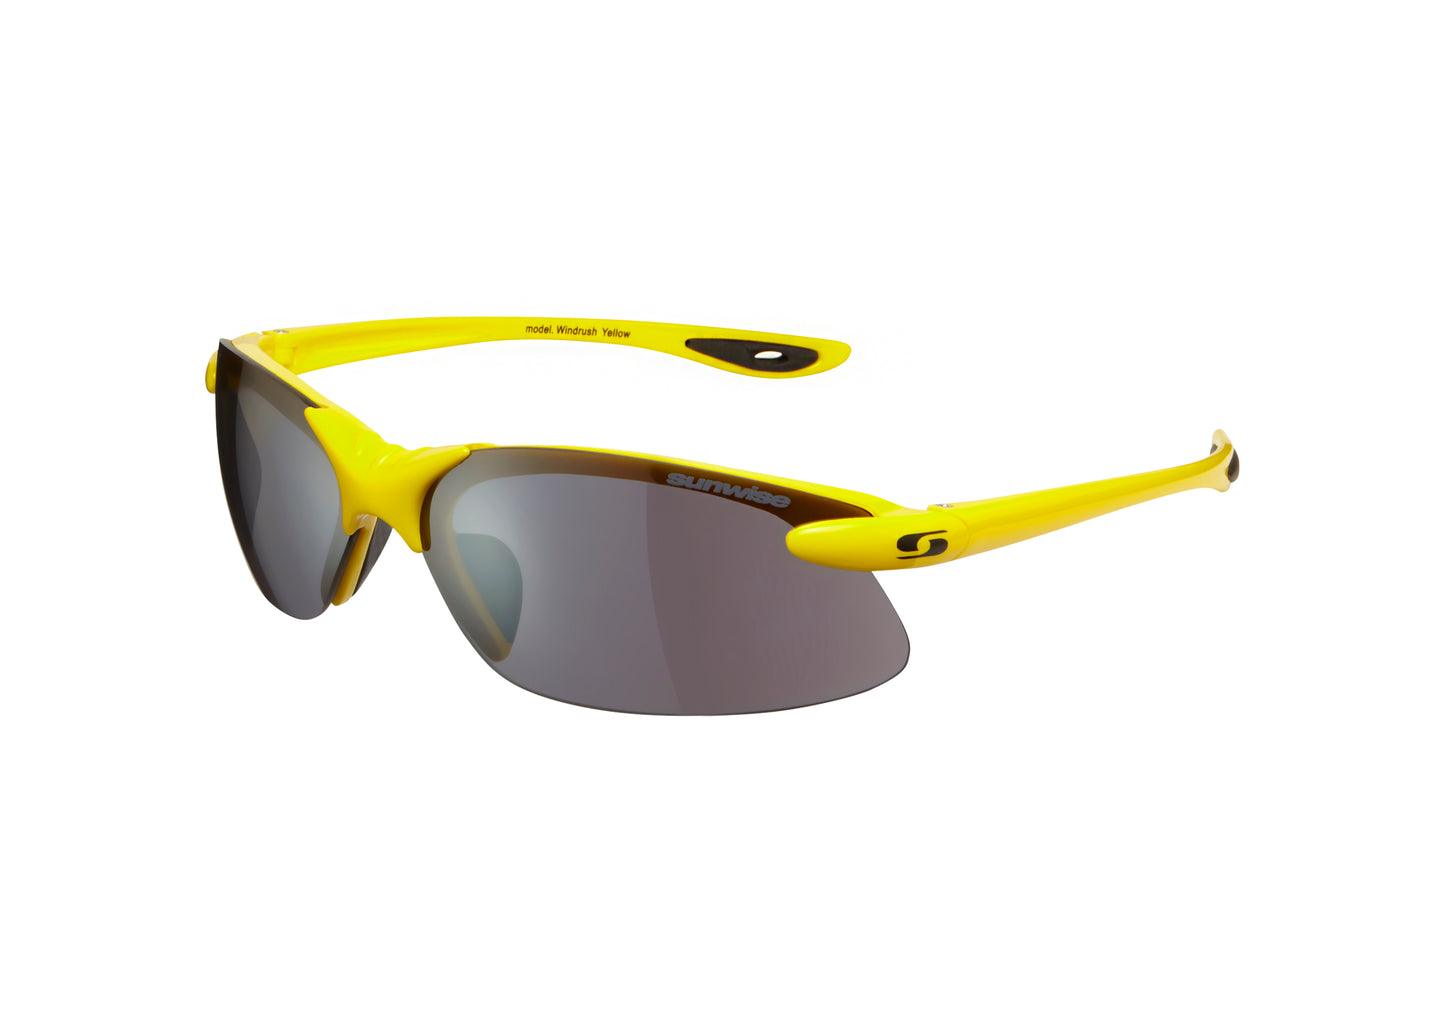 Sunwise sports sunglasses, Windrush, yellow with additional lenses